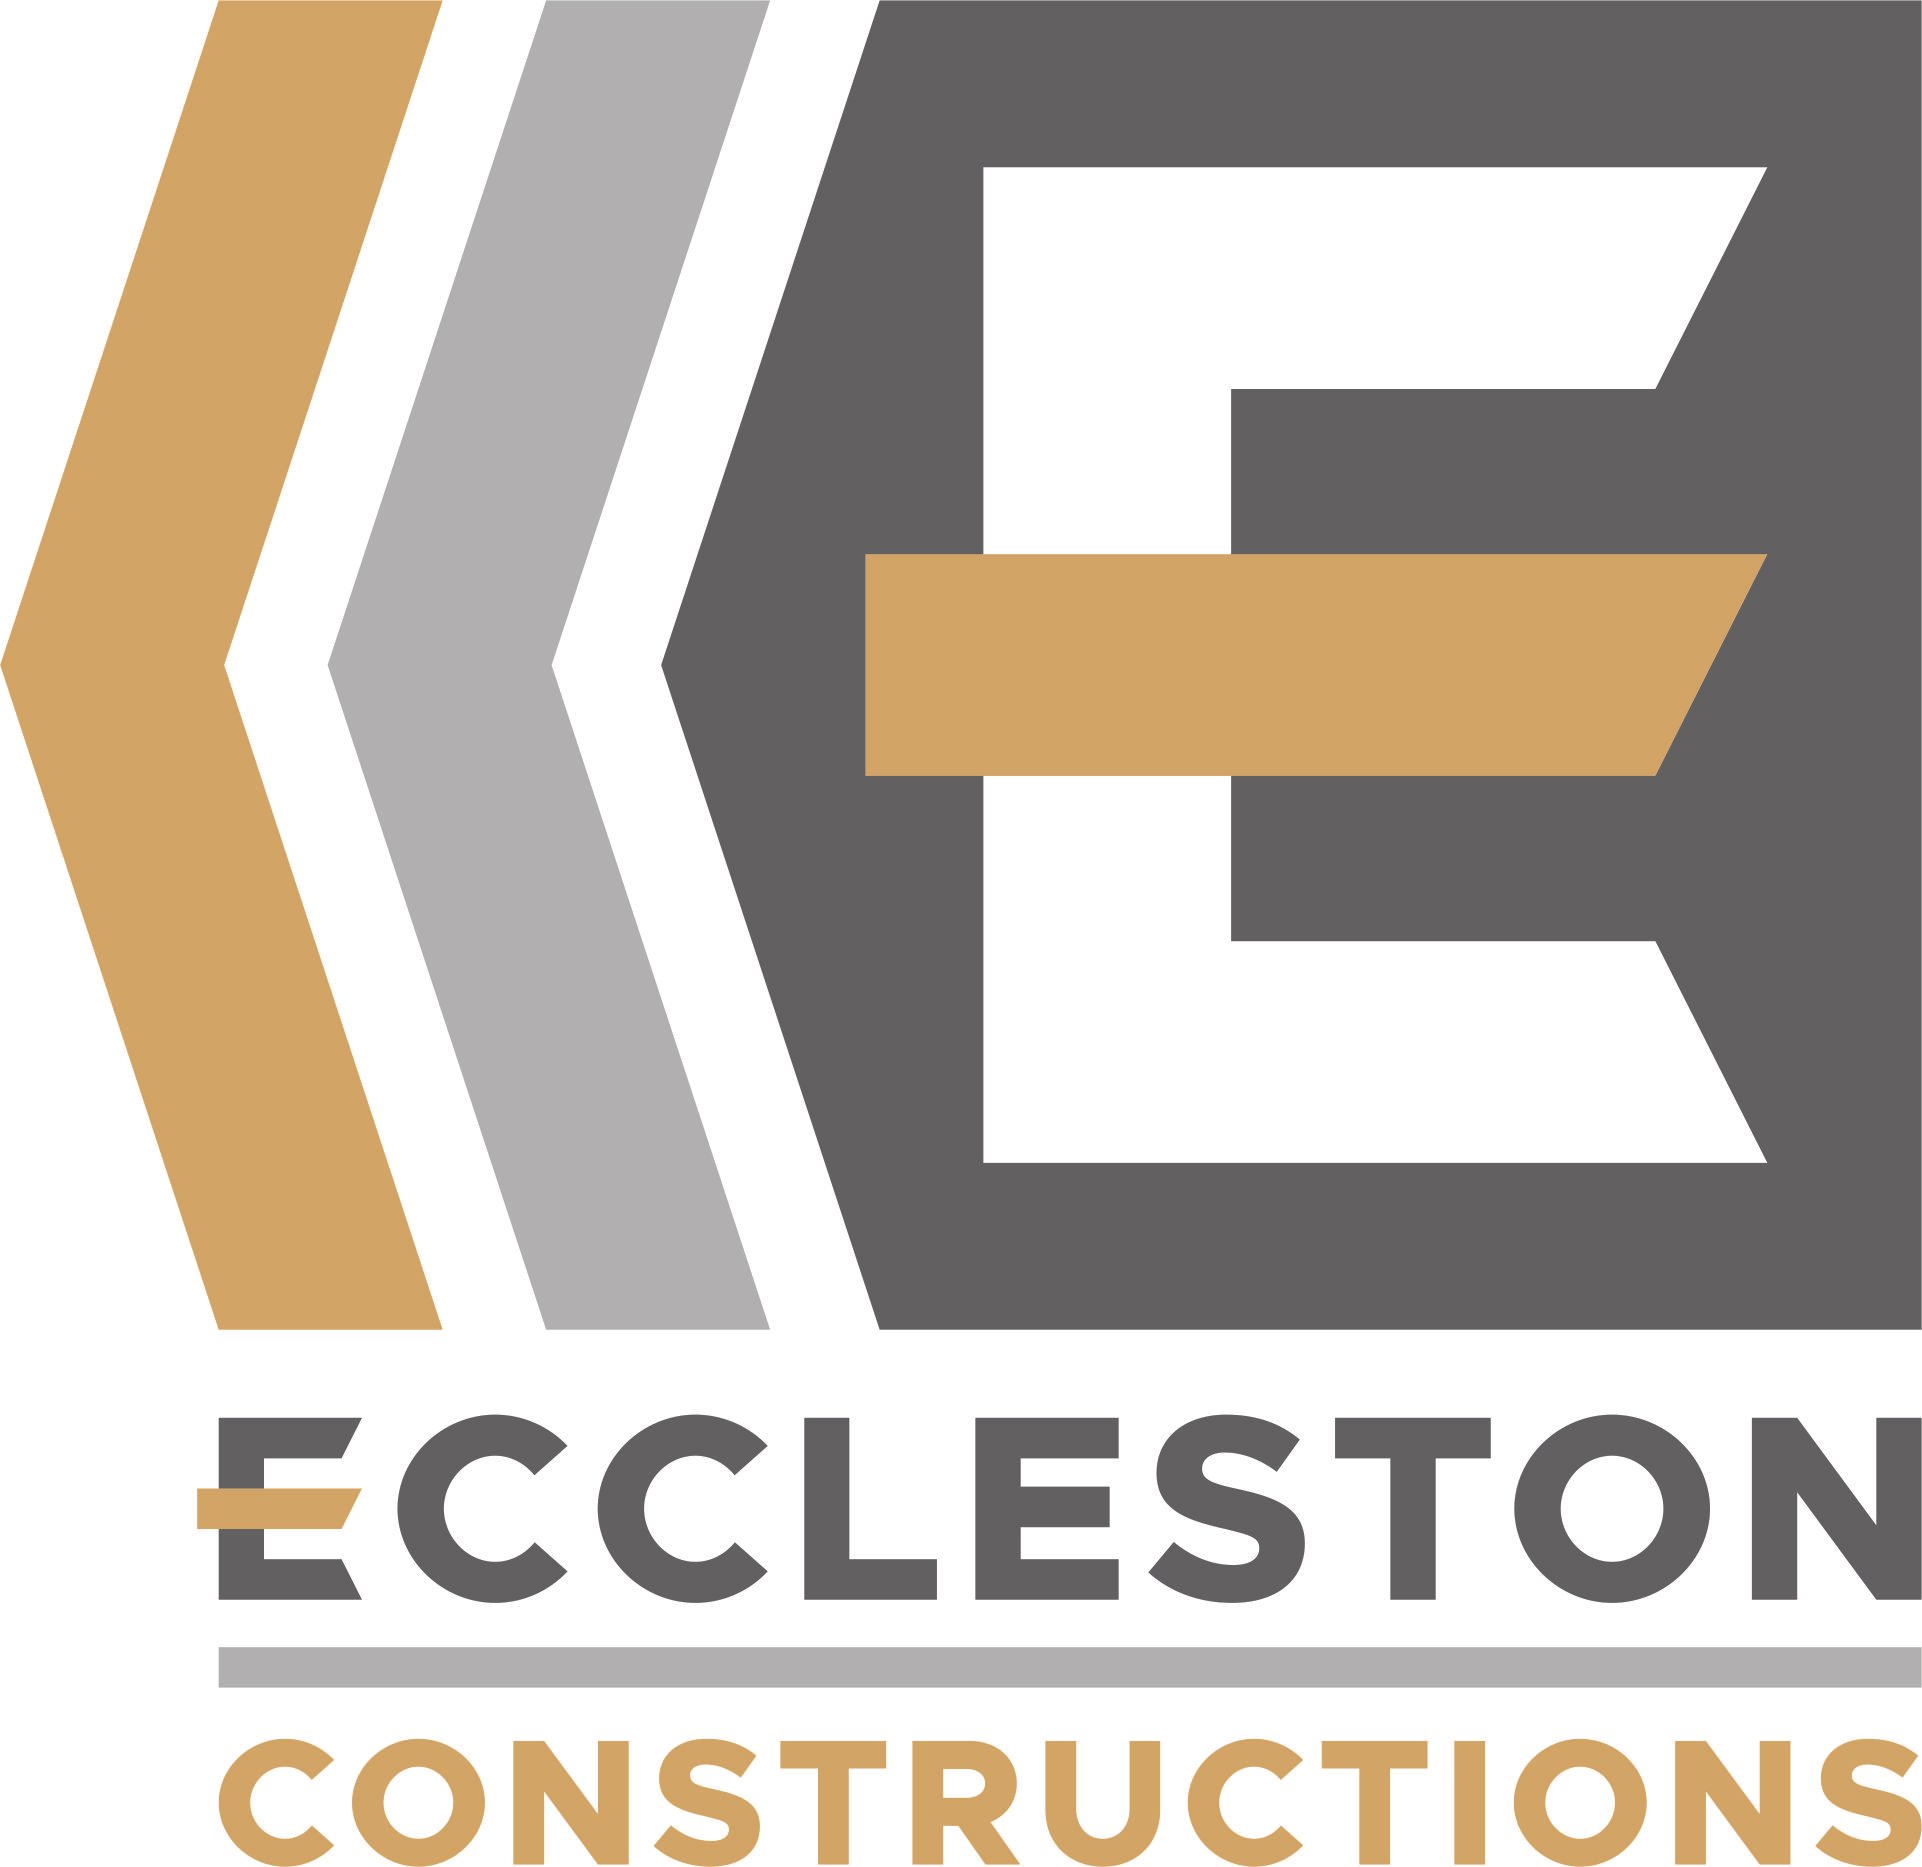 ECCLESTON CONSTRUCTIONS LOGO SQUARE.jpg